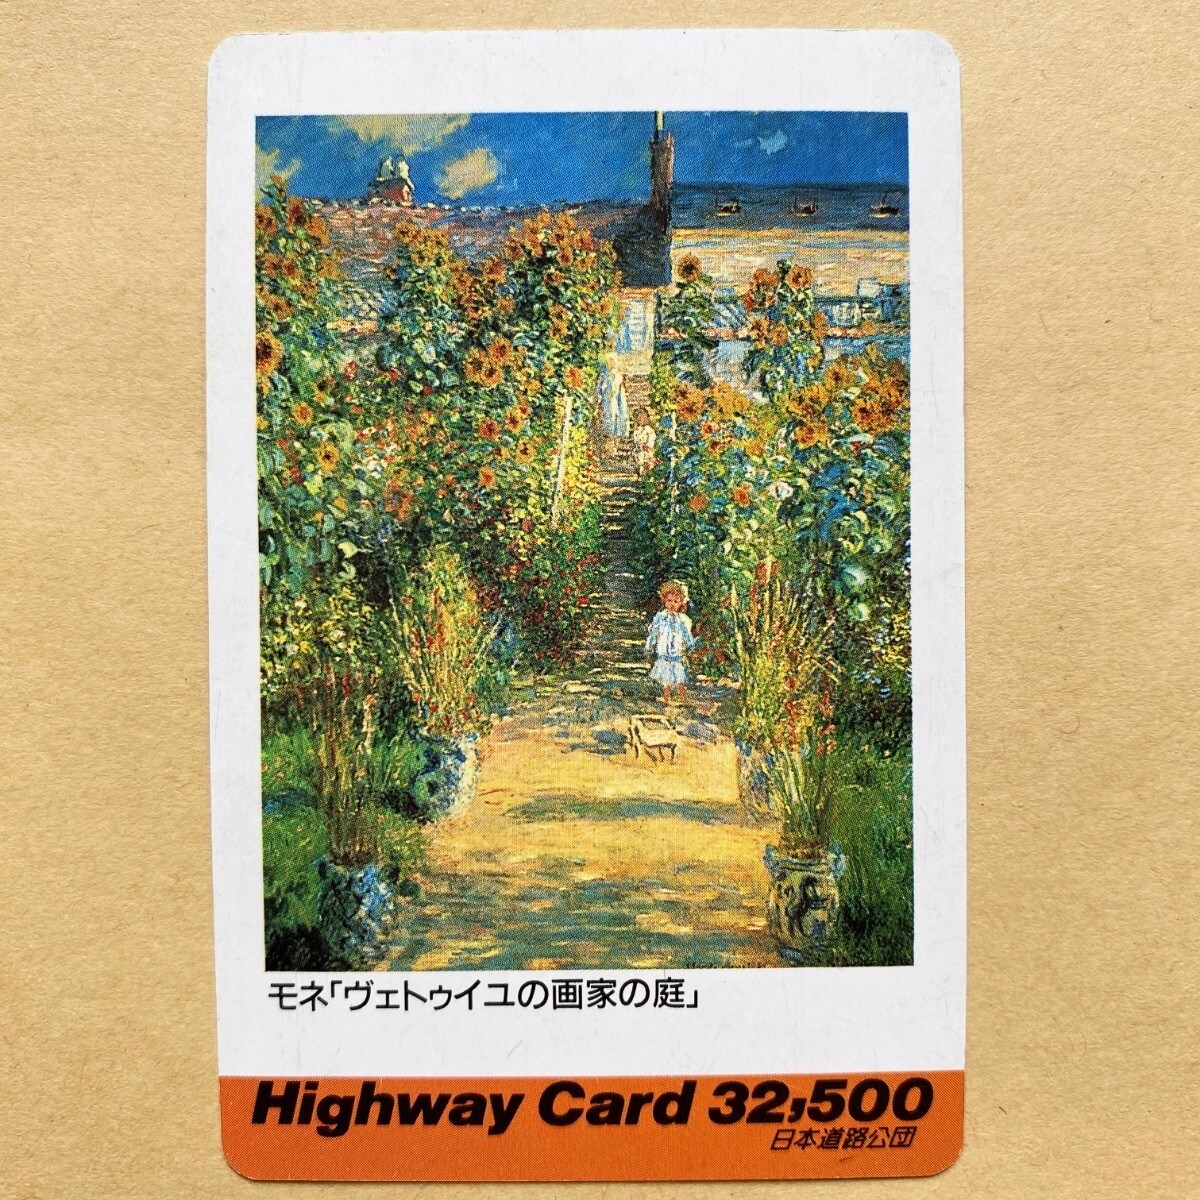 [ used ] picture highway card Japan road ..mone[vetuiyu. painter. garden ]